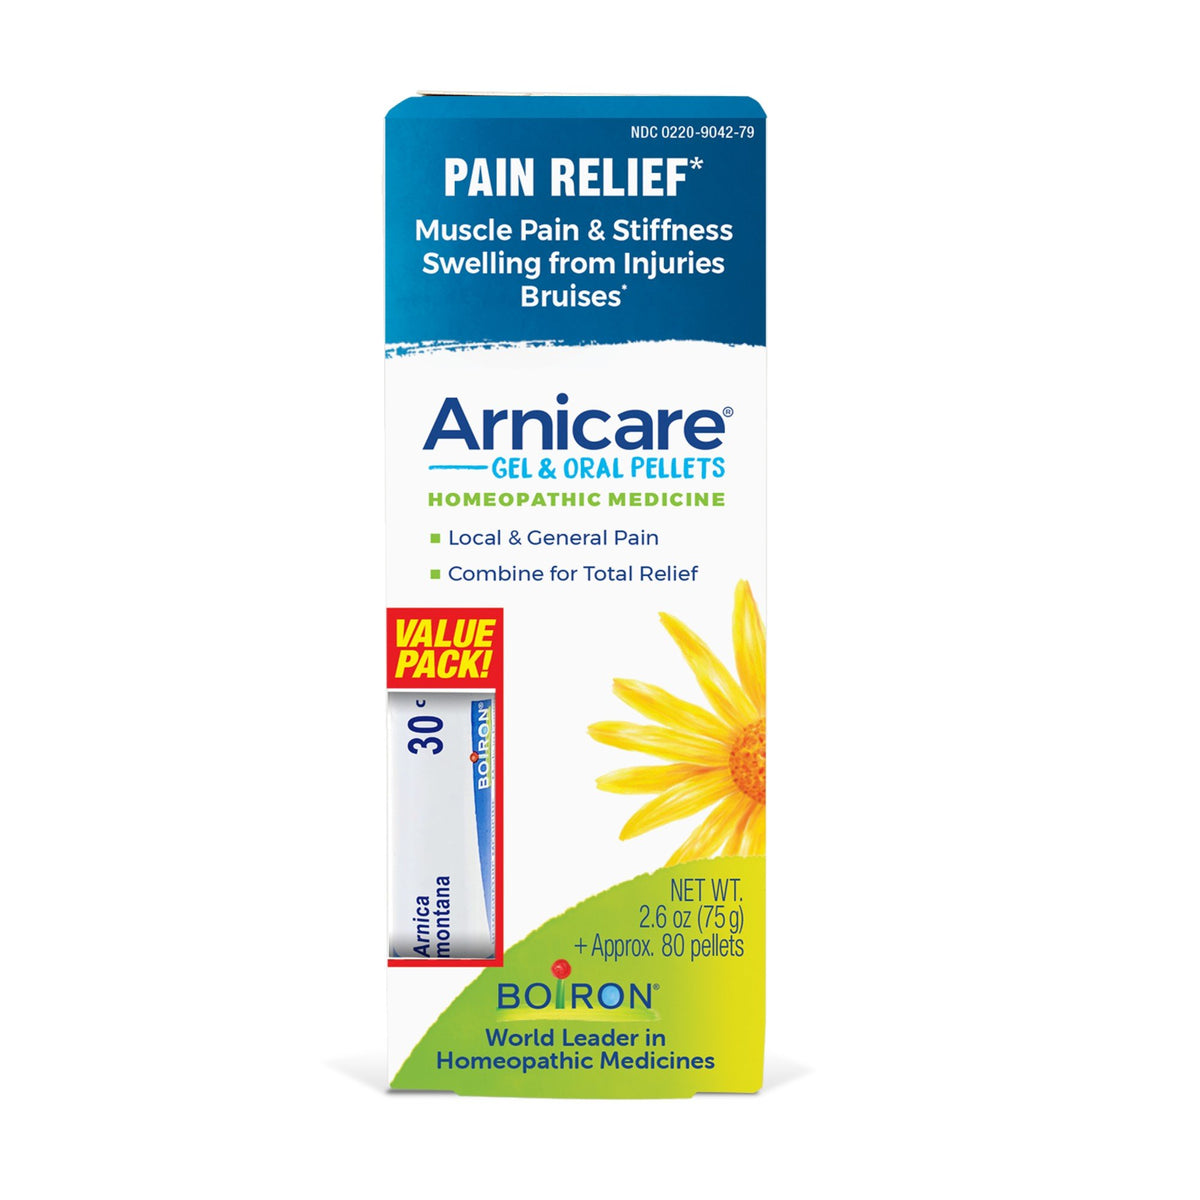 Boiron Arnicare Gel/MDT Value Pack Homeopathic Medicine For Pain Relief 2.6 oz + 80 Gel+Pellet